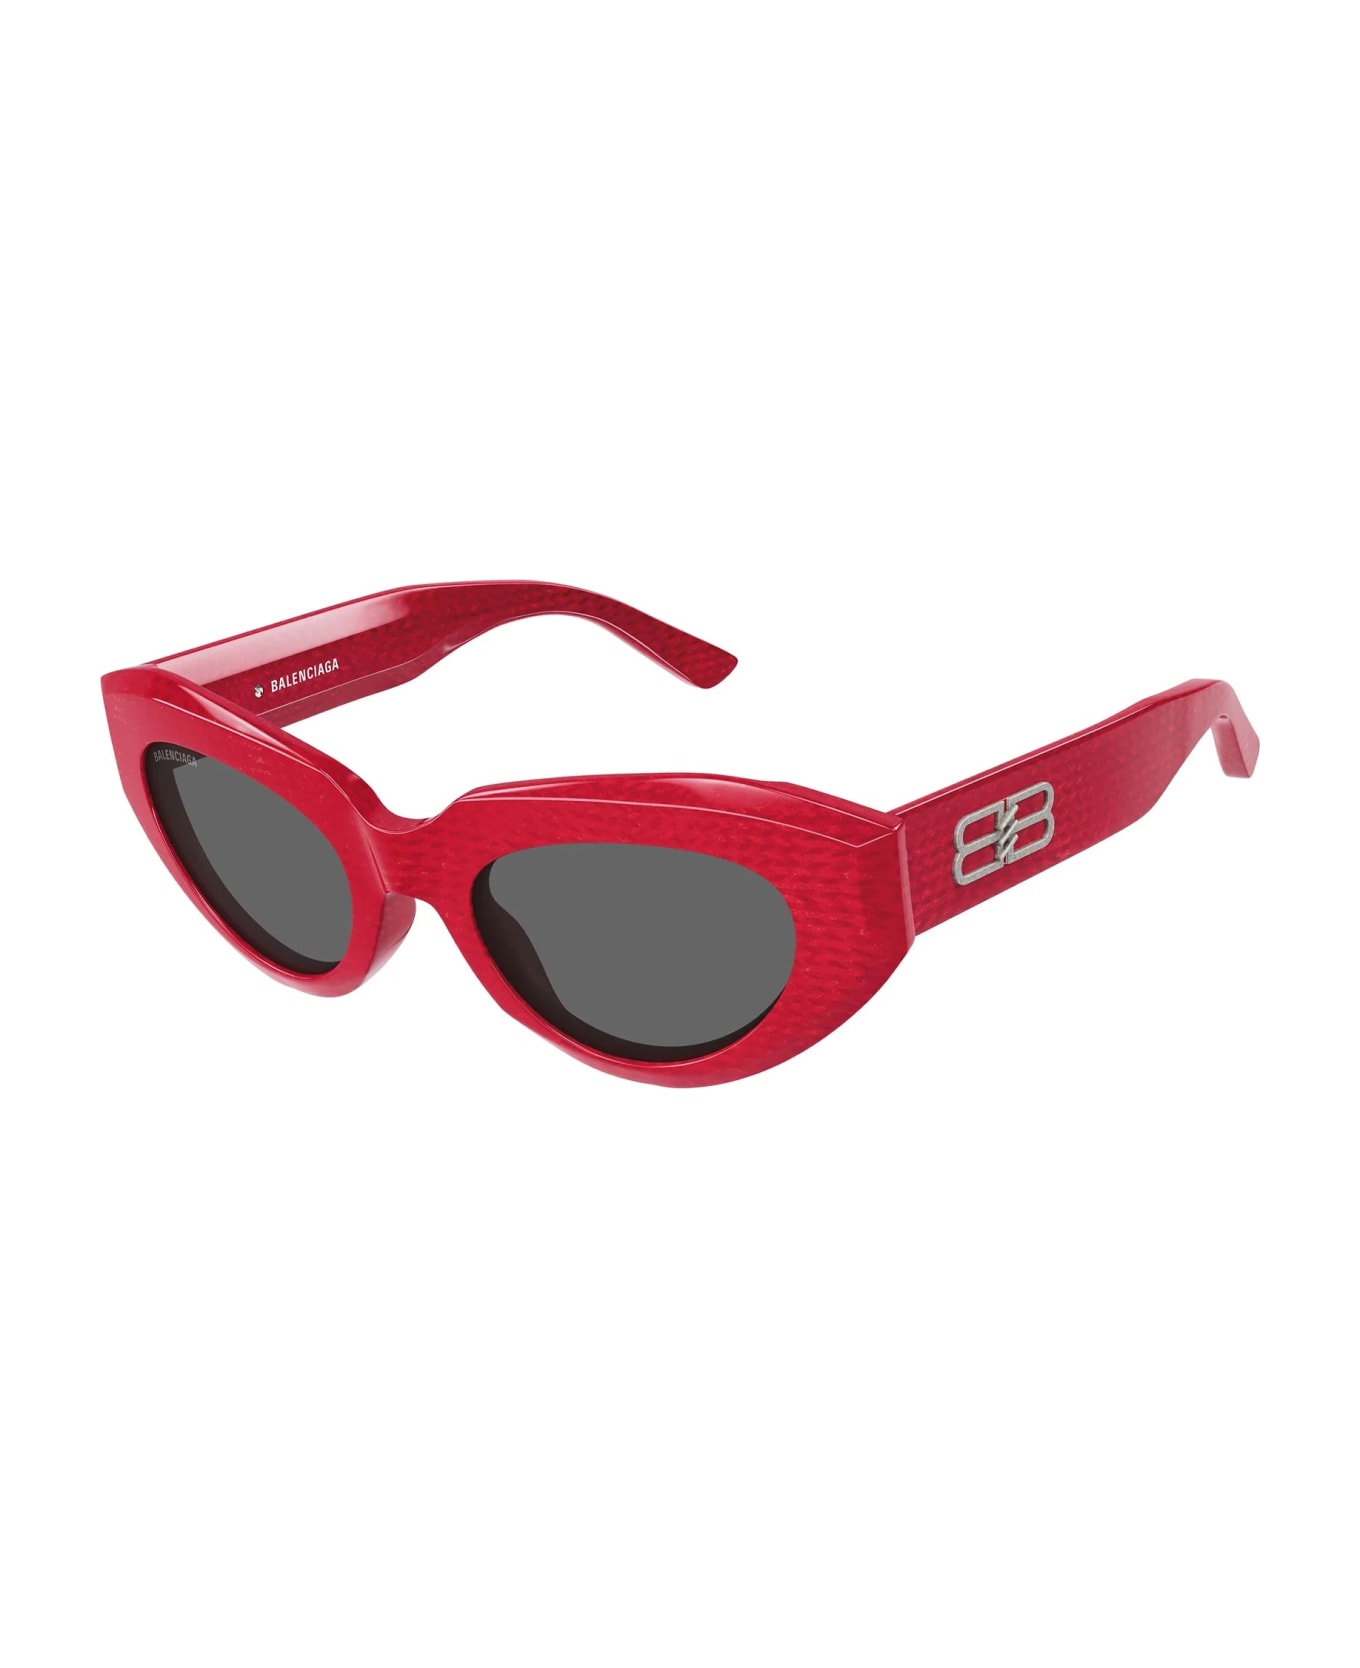 Balenciaga Eyewear Bb0236s-003 - Red Sunglasses - red